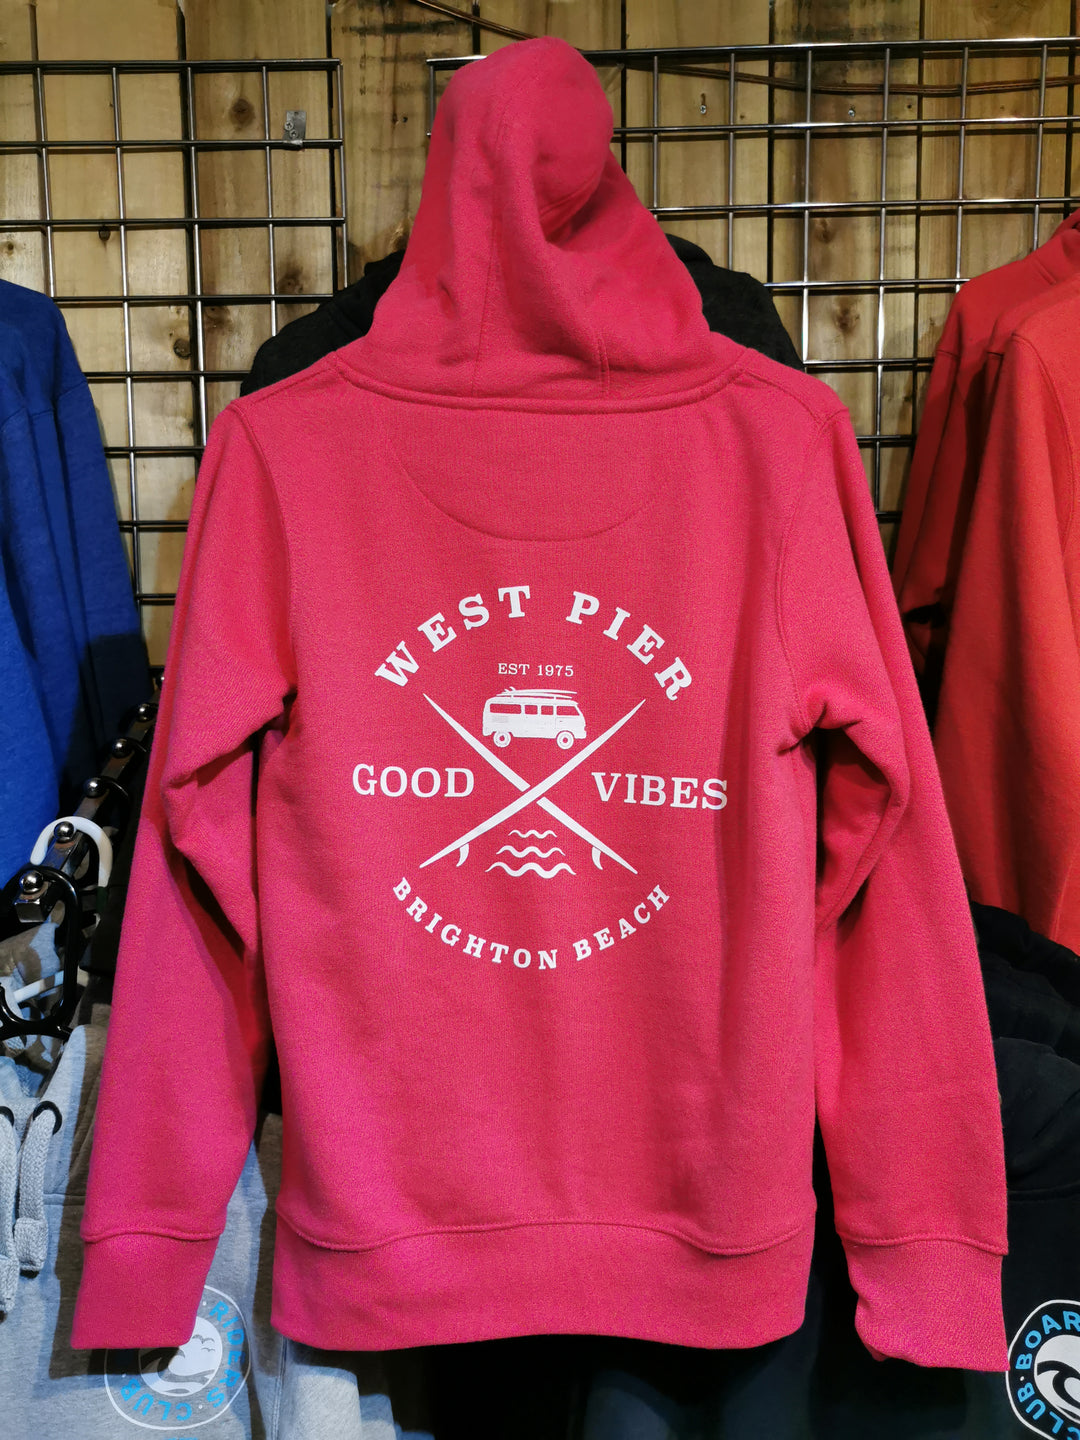 West Pier Hoodie - 'West Pier - Good Vibes - Brighton Beach' Camper Van Logo - Fuschia Pink